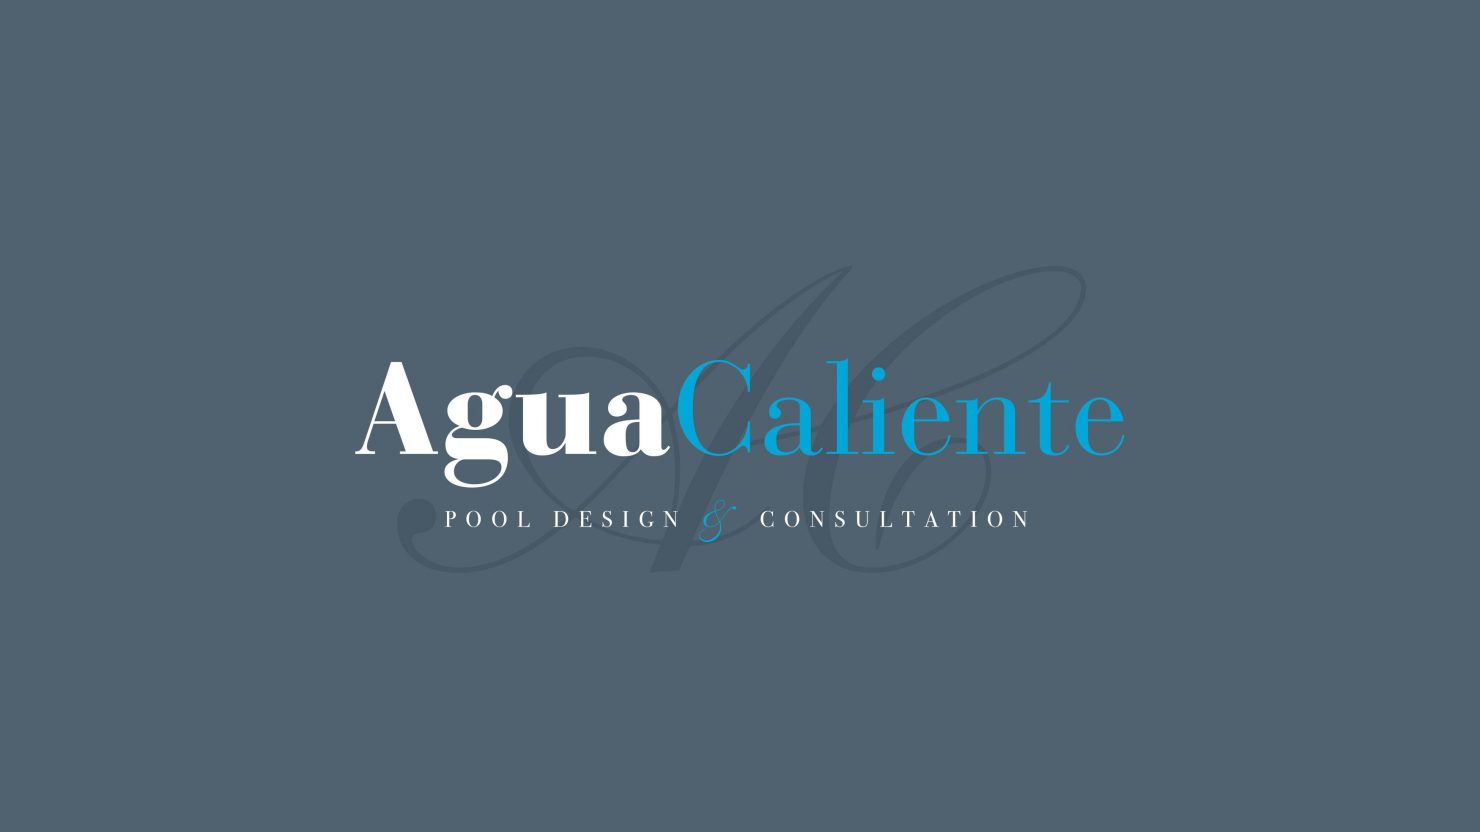 logo design and branding for agua caliente website